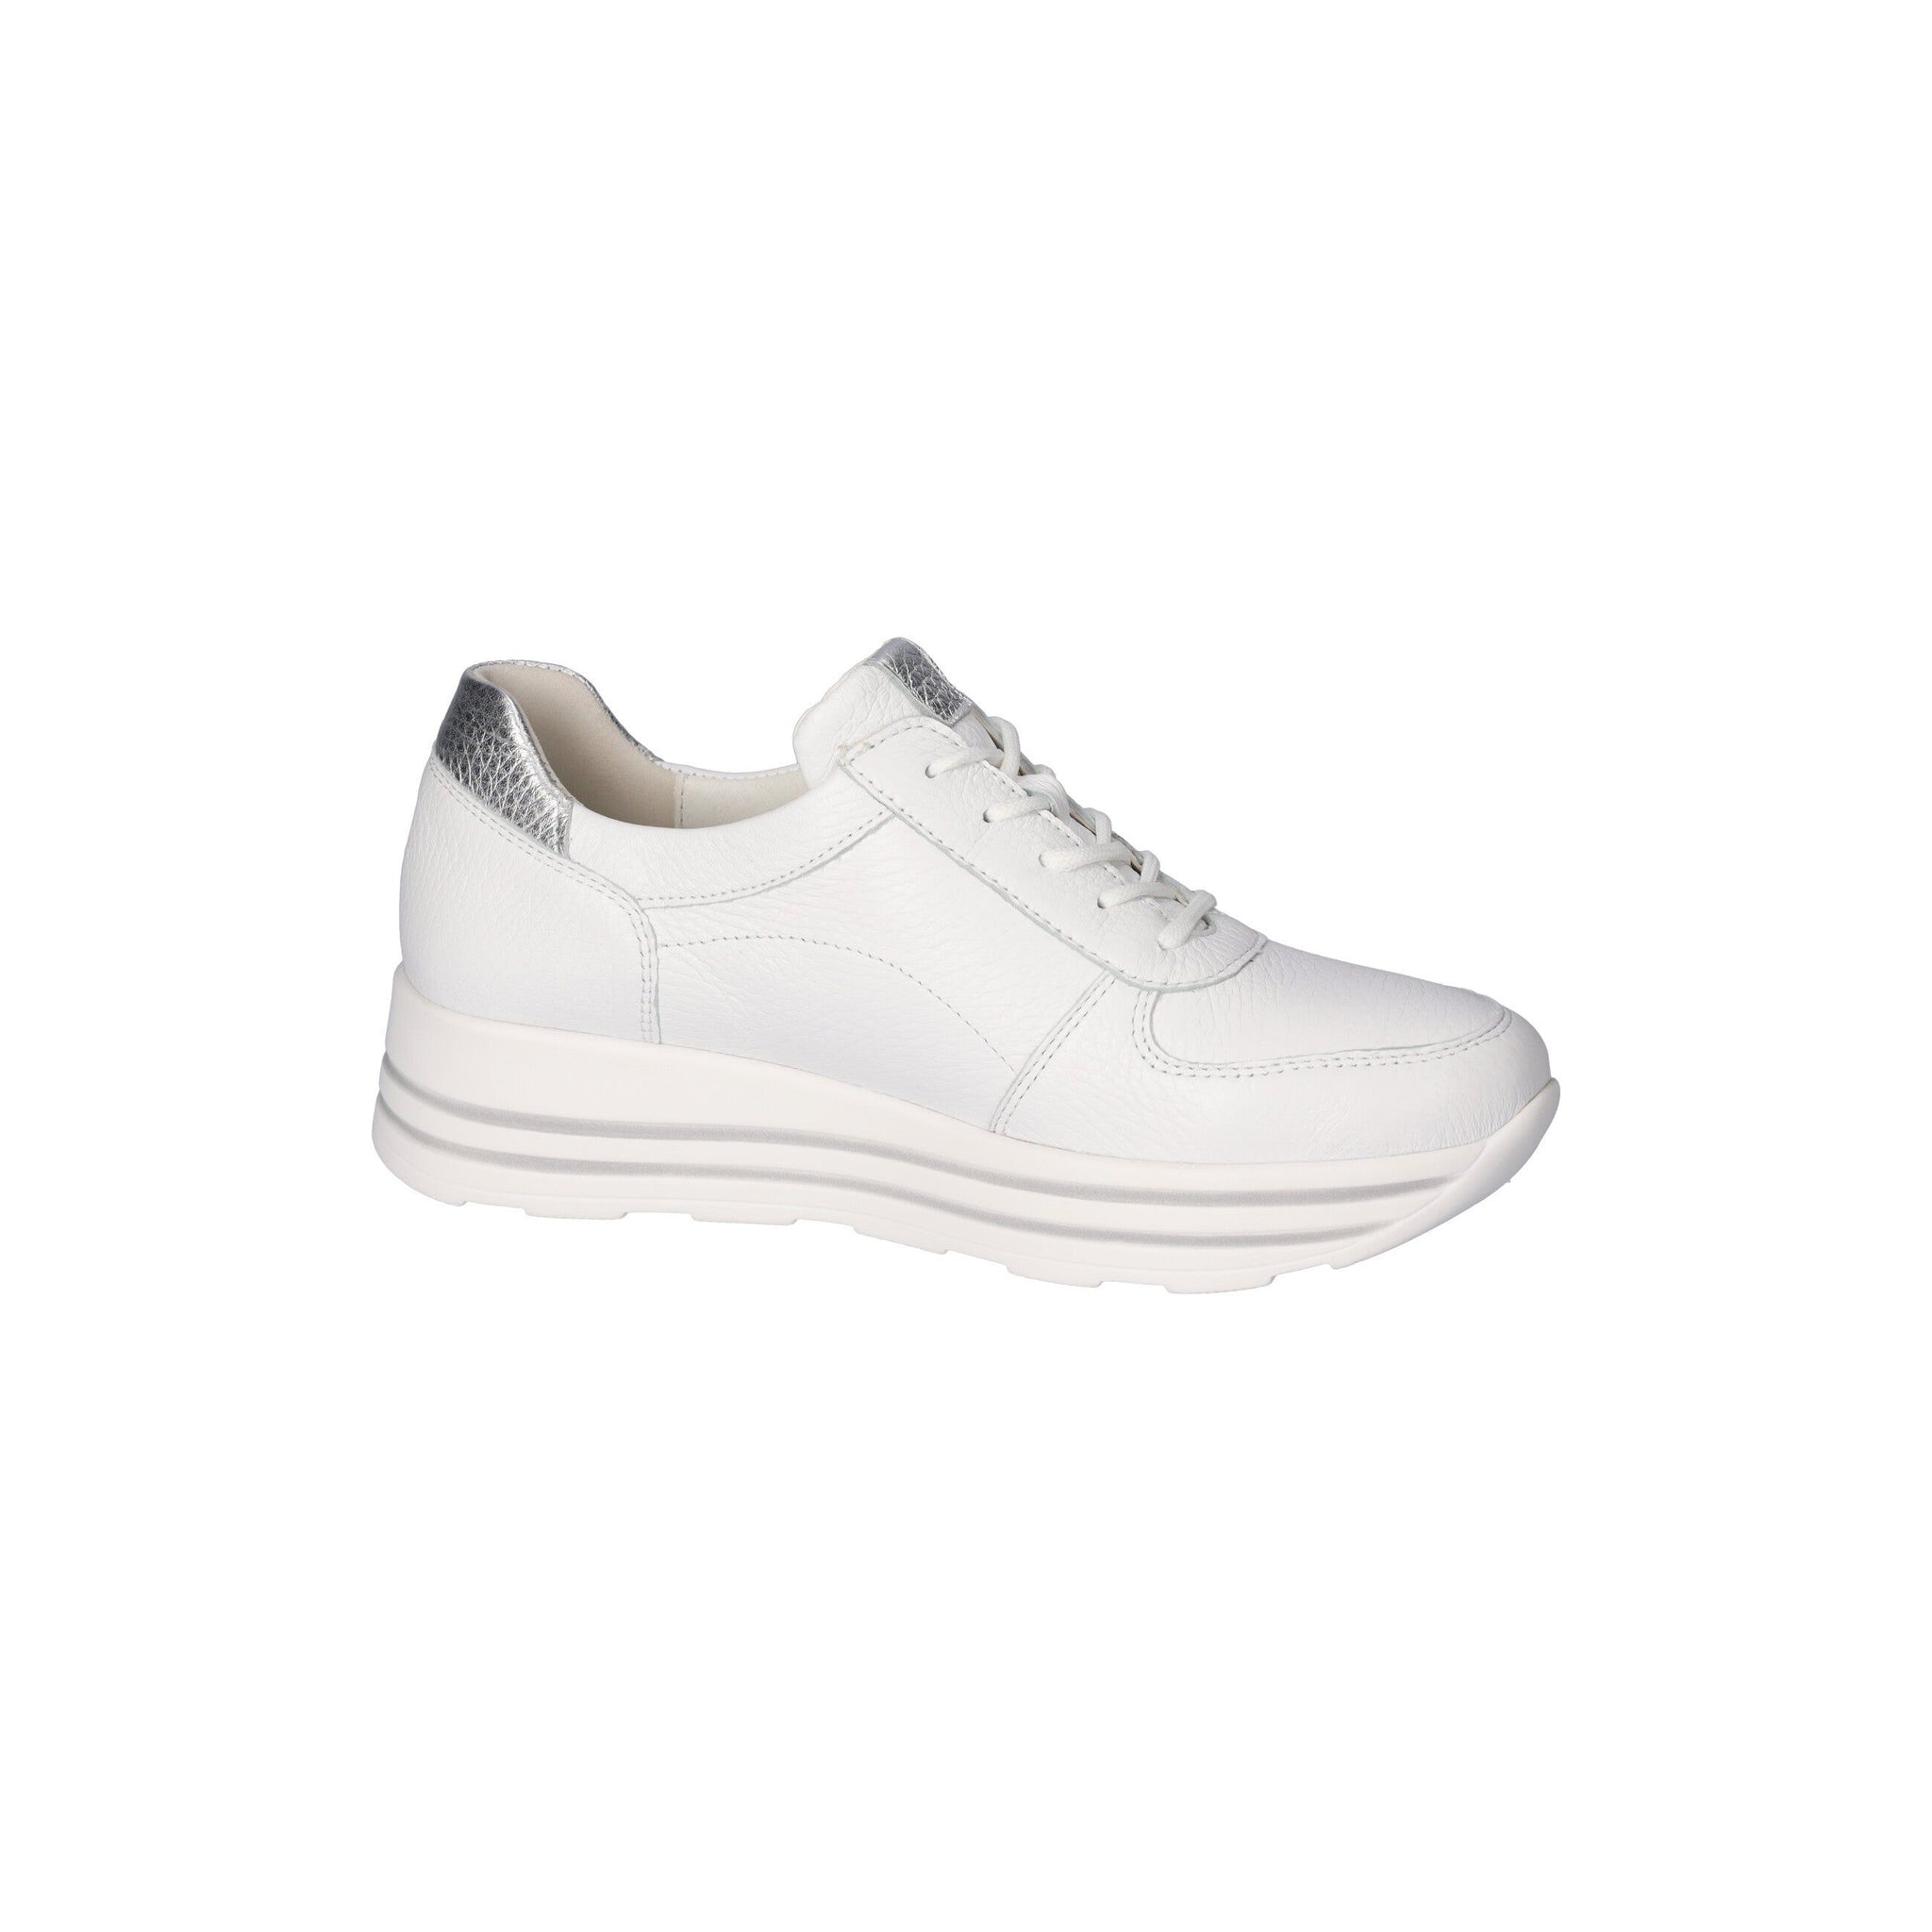 Waldlaufer H-Lana (758009) - Ladies Lace Trainer with Zip in White. Waldlaufer | Wide Fit Shoes | Wisemans | Bantry | West Cork | Munster | Shoe Shop | Ireland